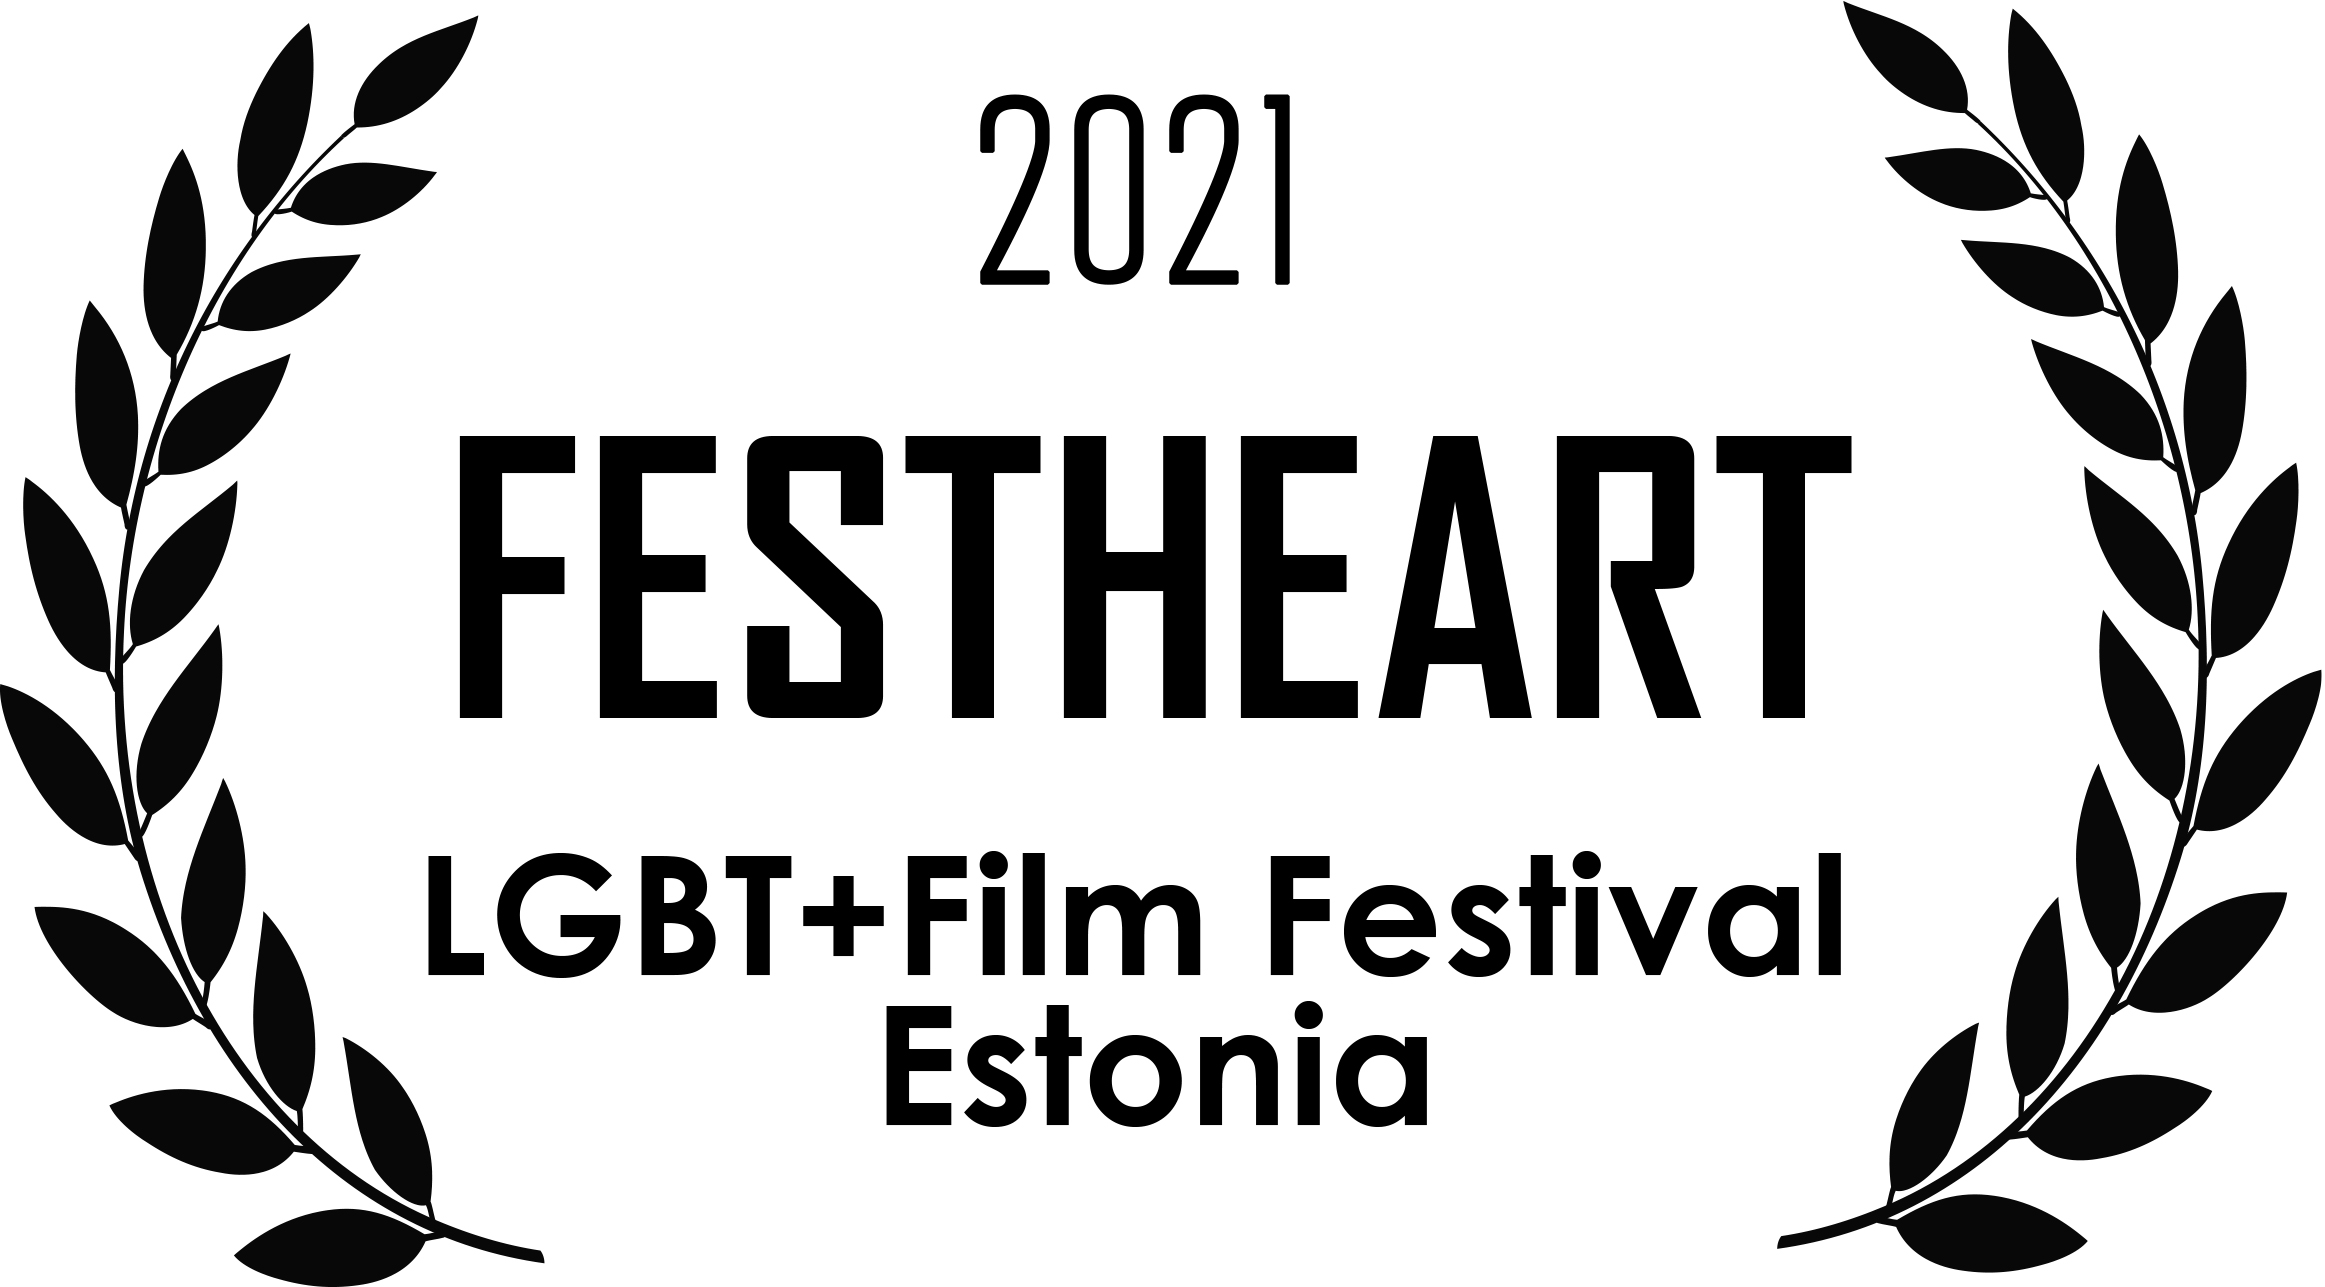 Festheart LGBT+ Film Festival Estonia